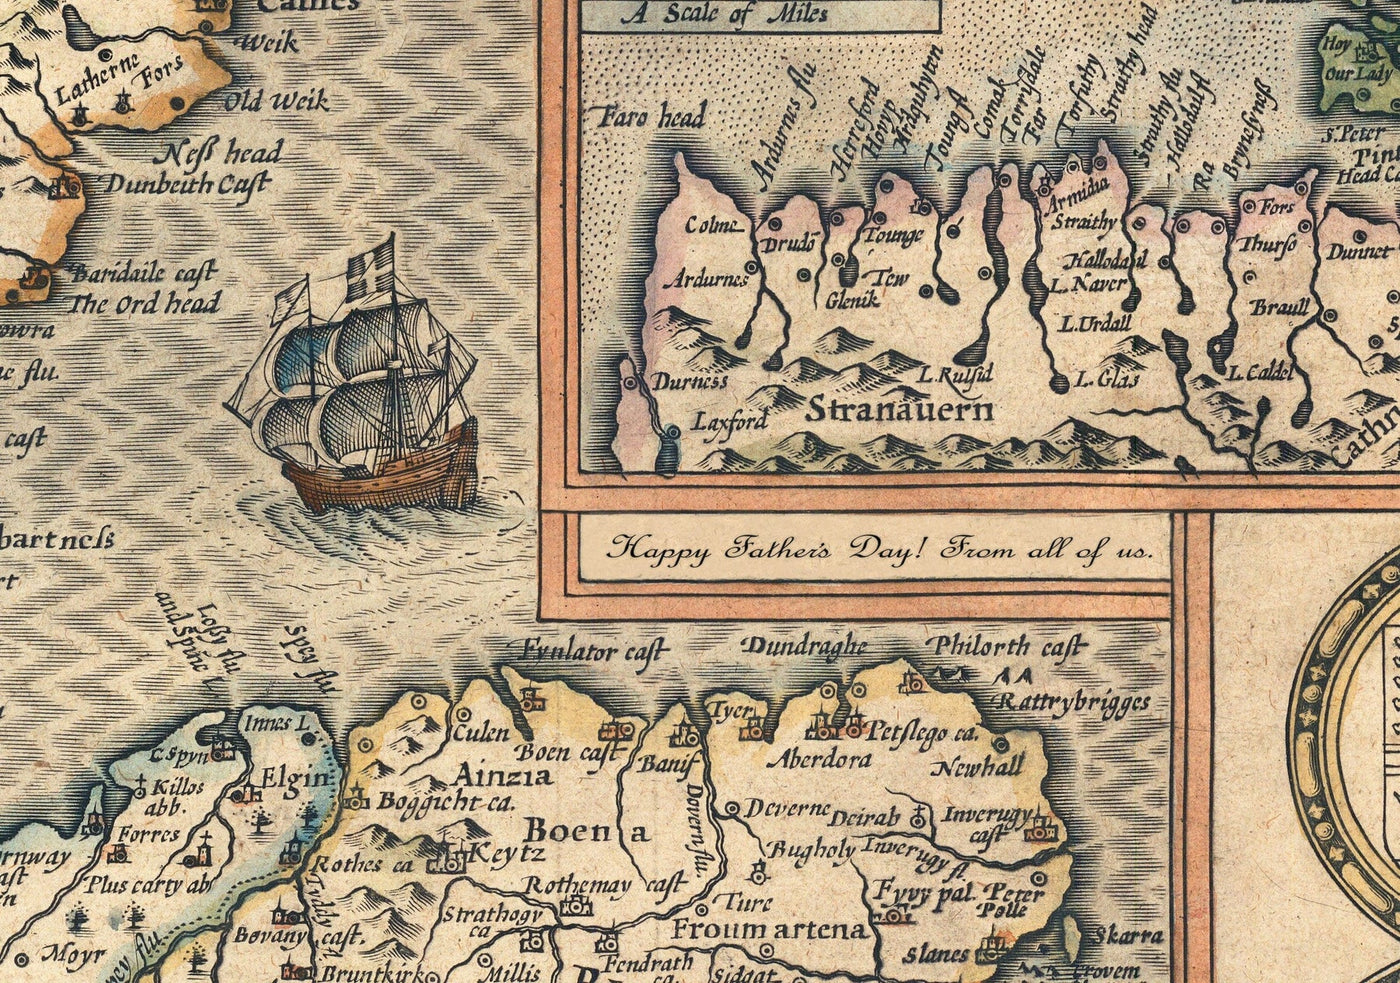 Old Map of Ireland, Hibernia in 1654 by Joan Blaeu from the Theatrum Orbis Terrarum Sive Atlas Novus - British Isles